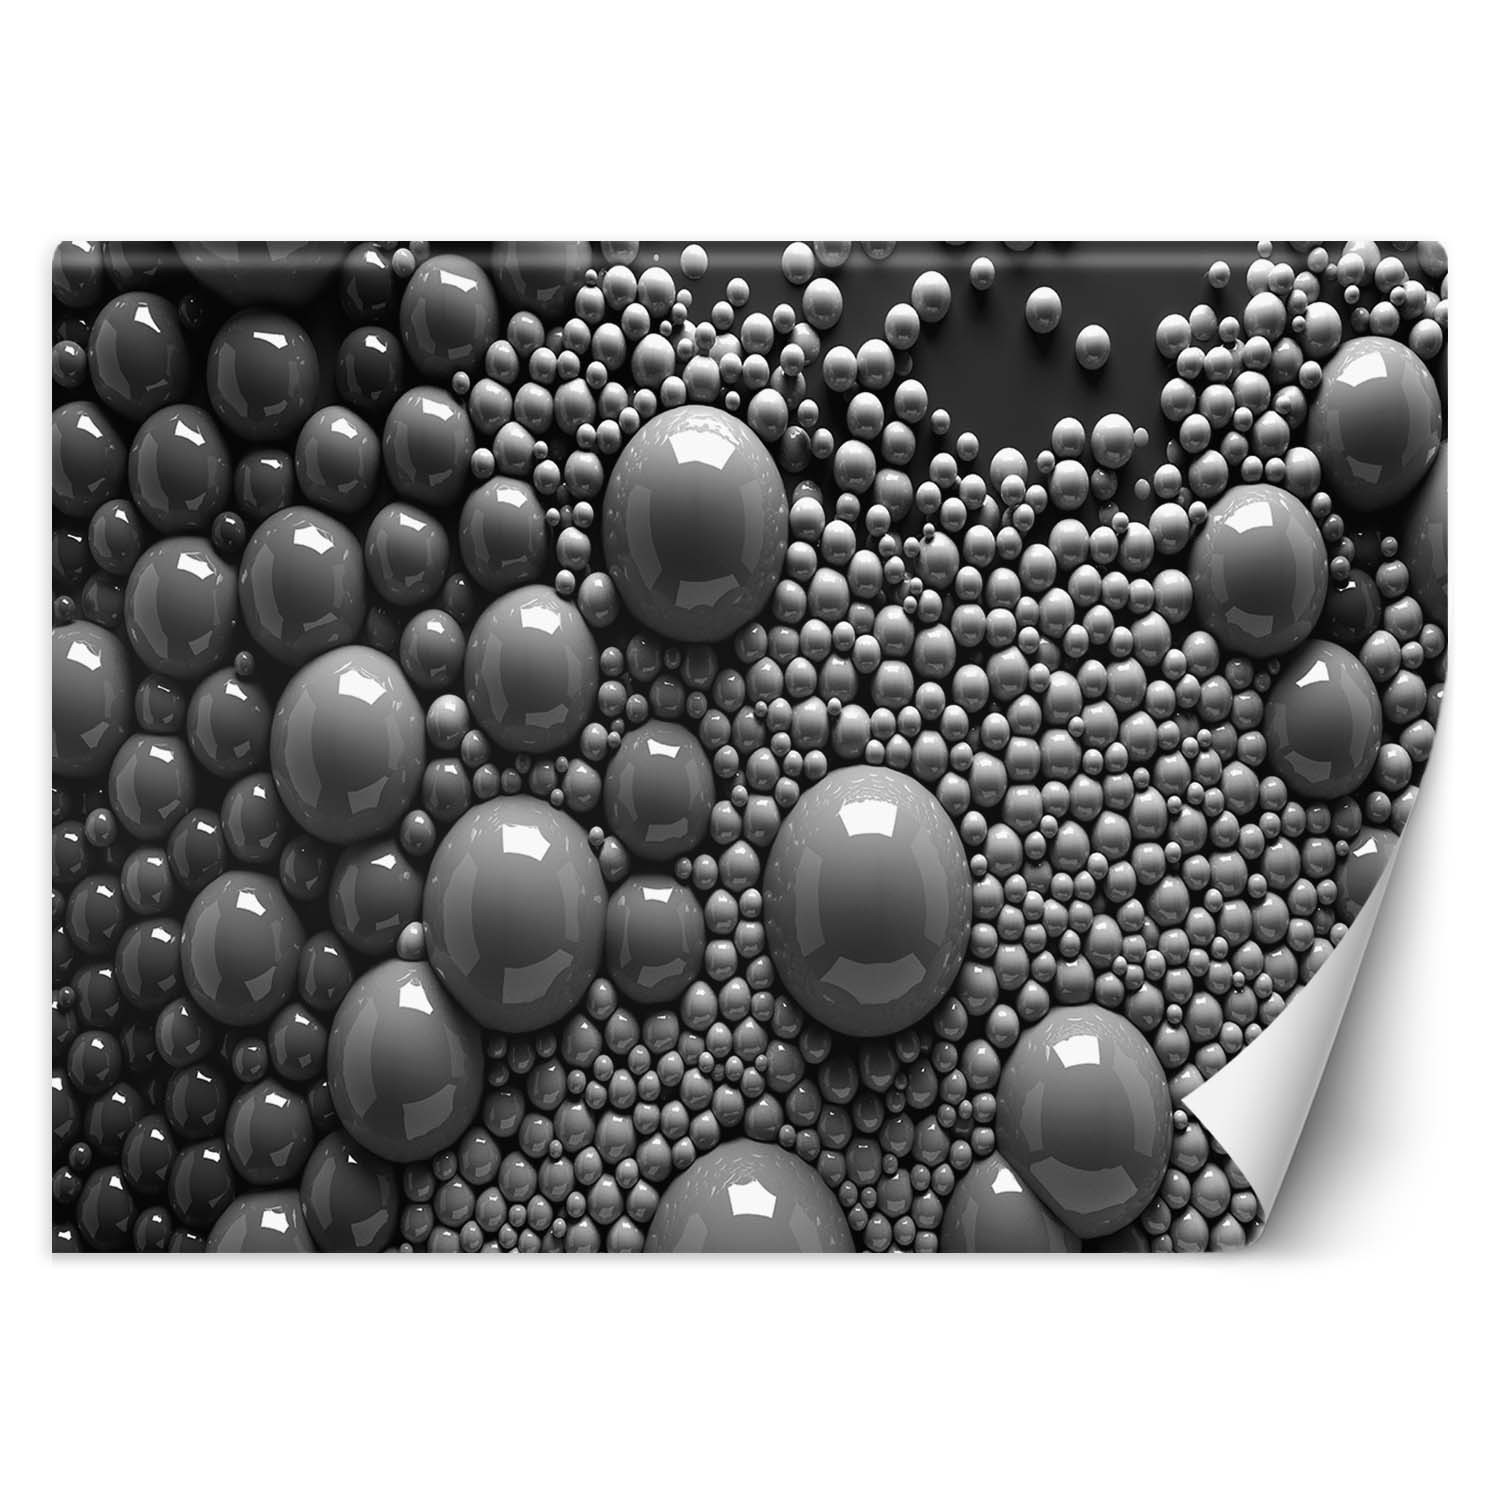 Trend24 – Behang – Abstracte 3D-Bollen – Vliesbehang – Fotobehang 3D – Behang Woonkamer – 400x280x2 cm – Incl. behanglijm